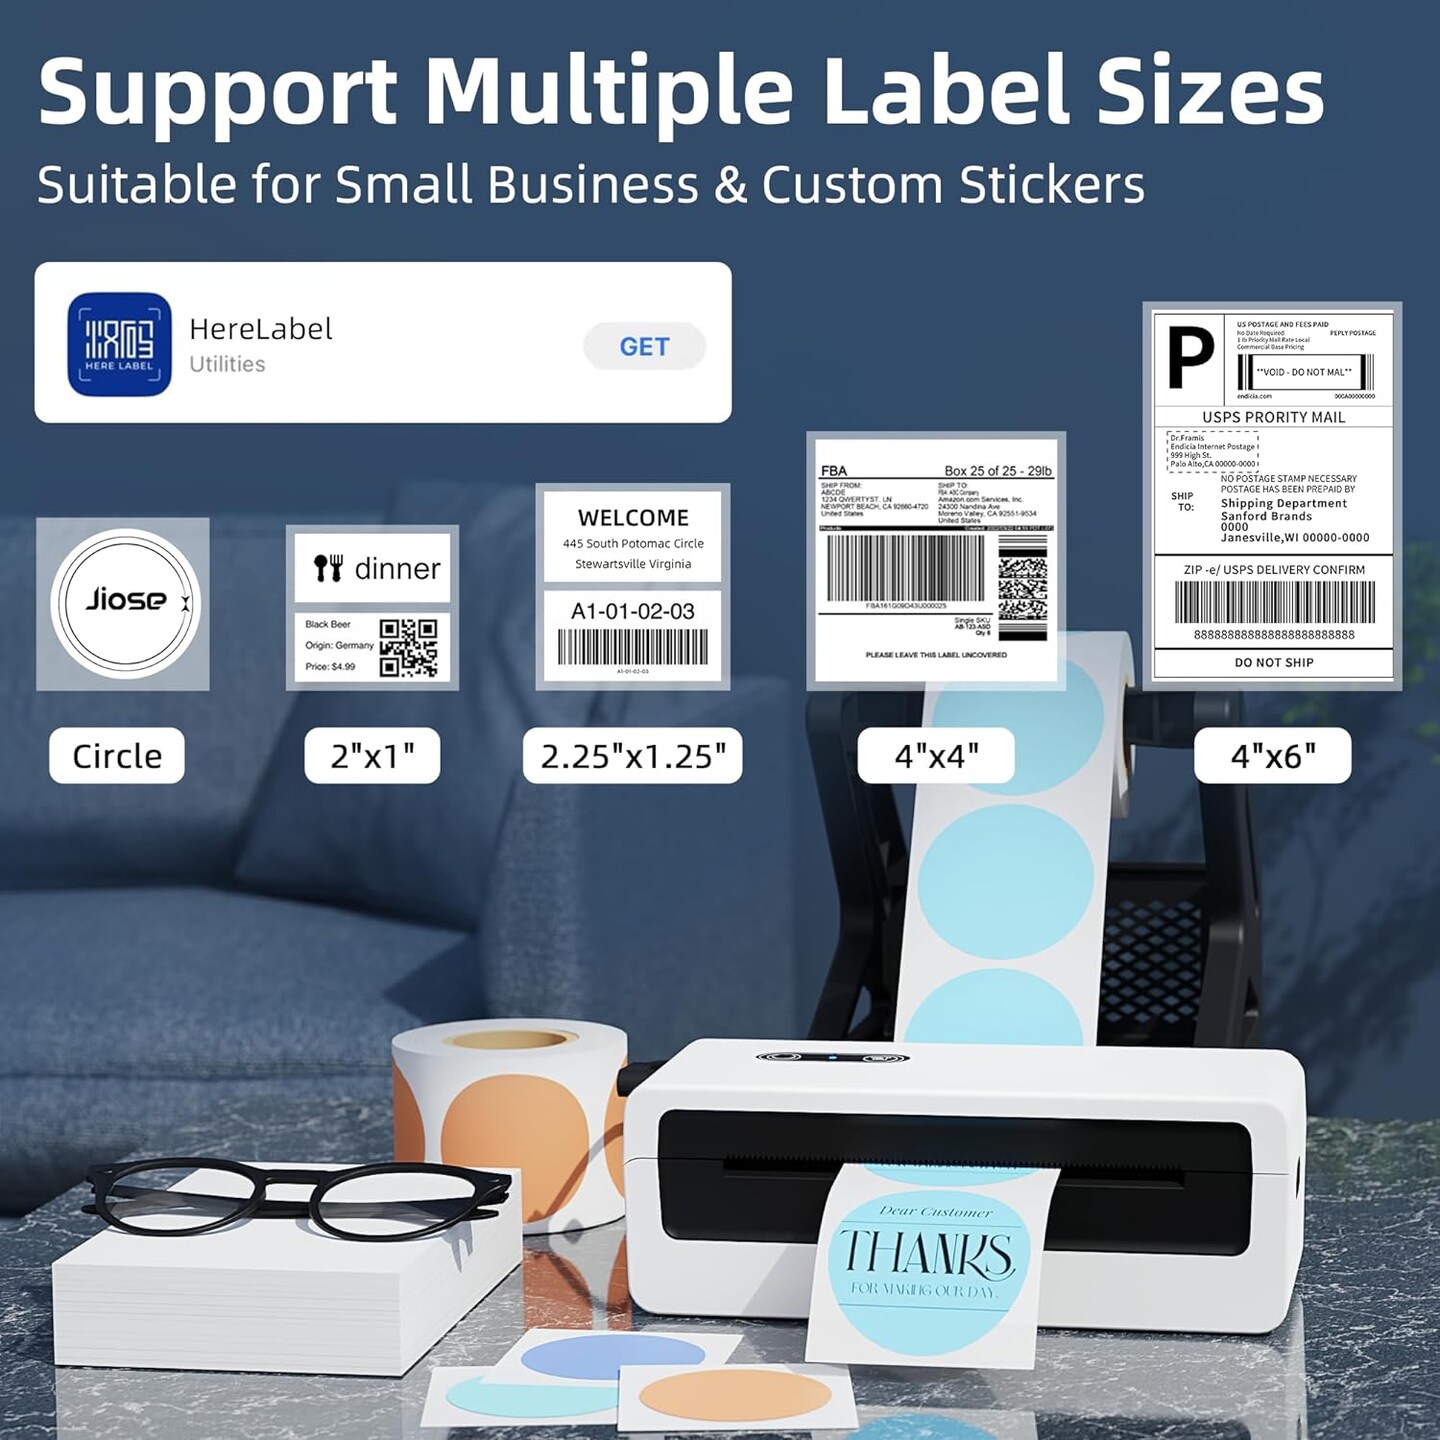 Jiose&#xAE;- Bluetooth Thermal Label Printer | Streamline Your Labeling Tasks